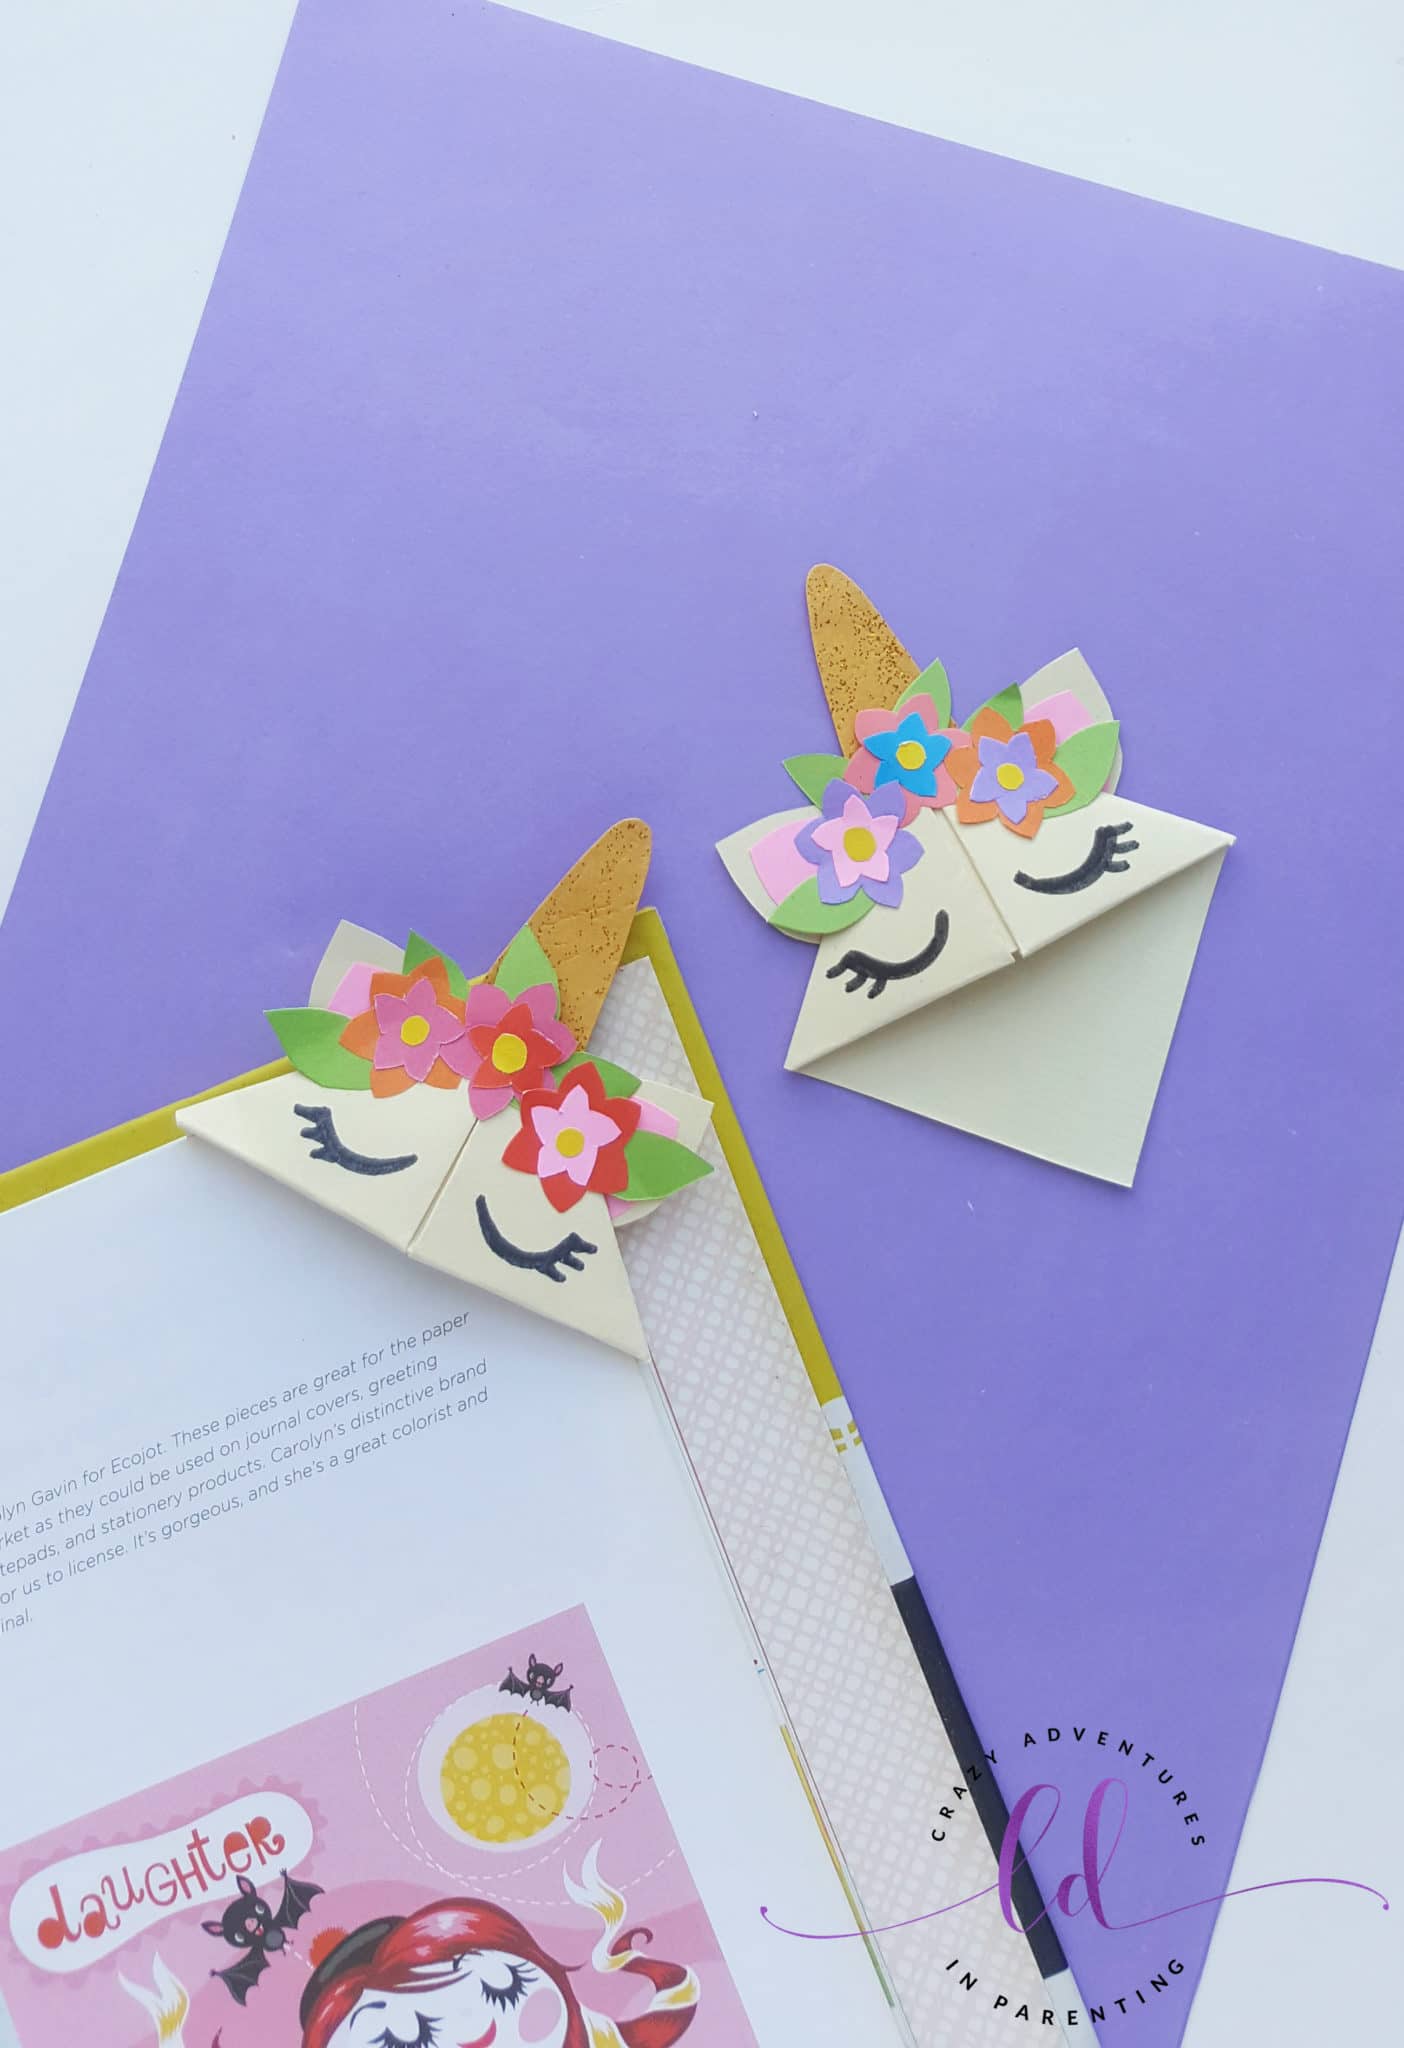 Easy Origami Unicorn Corner Bookmark